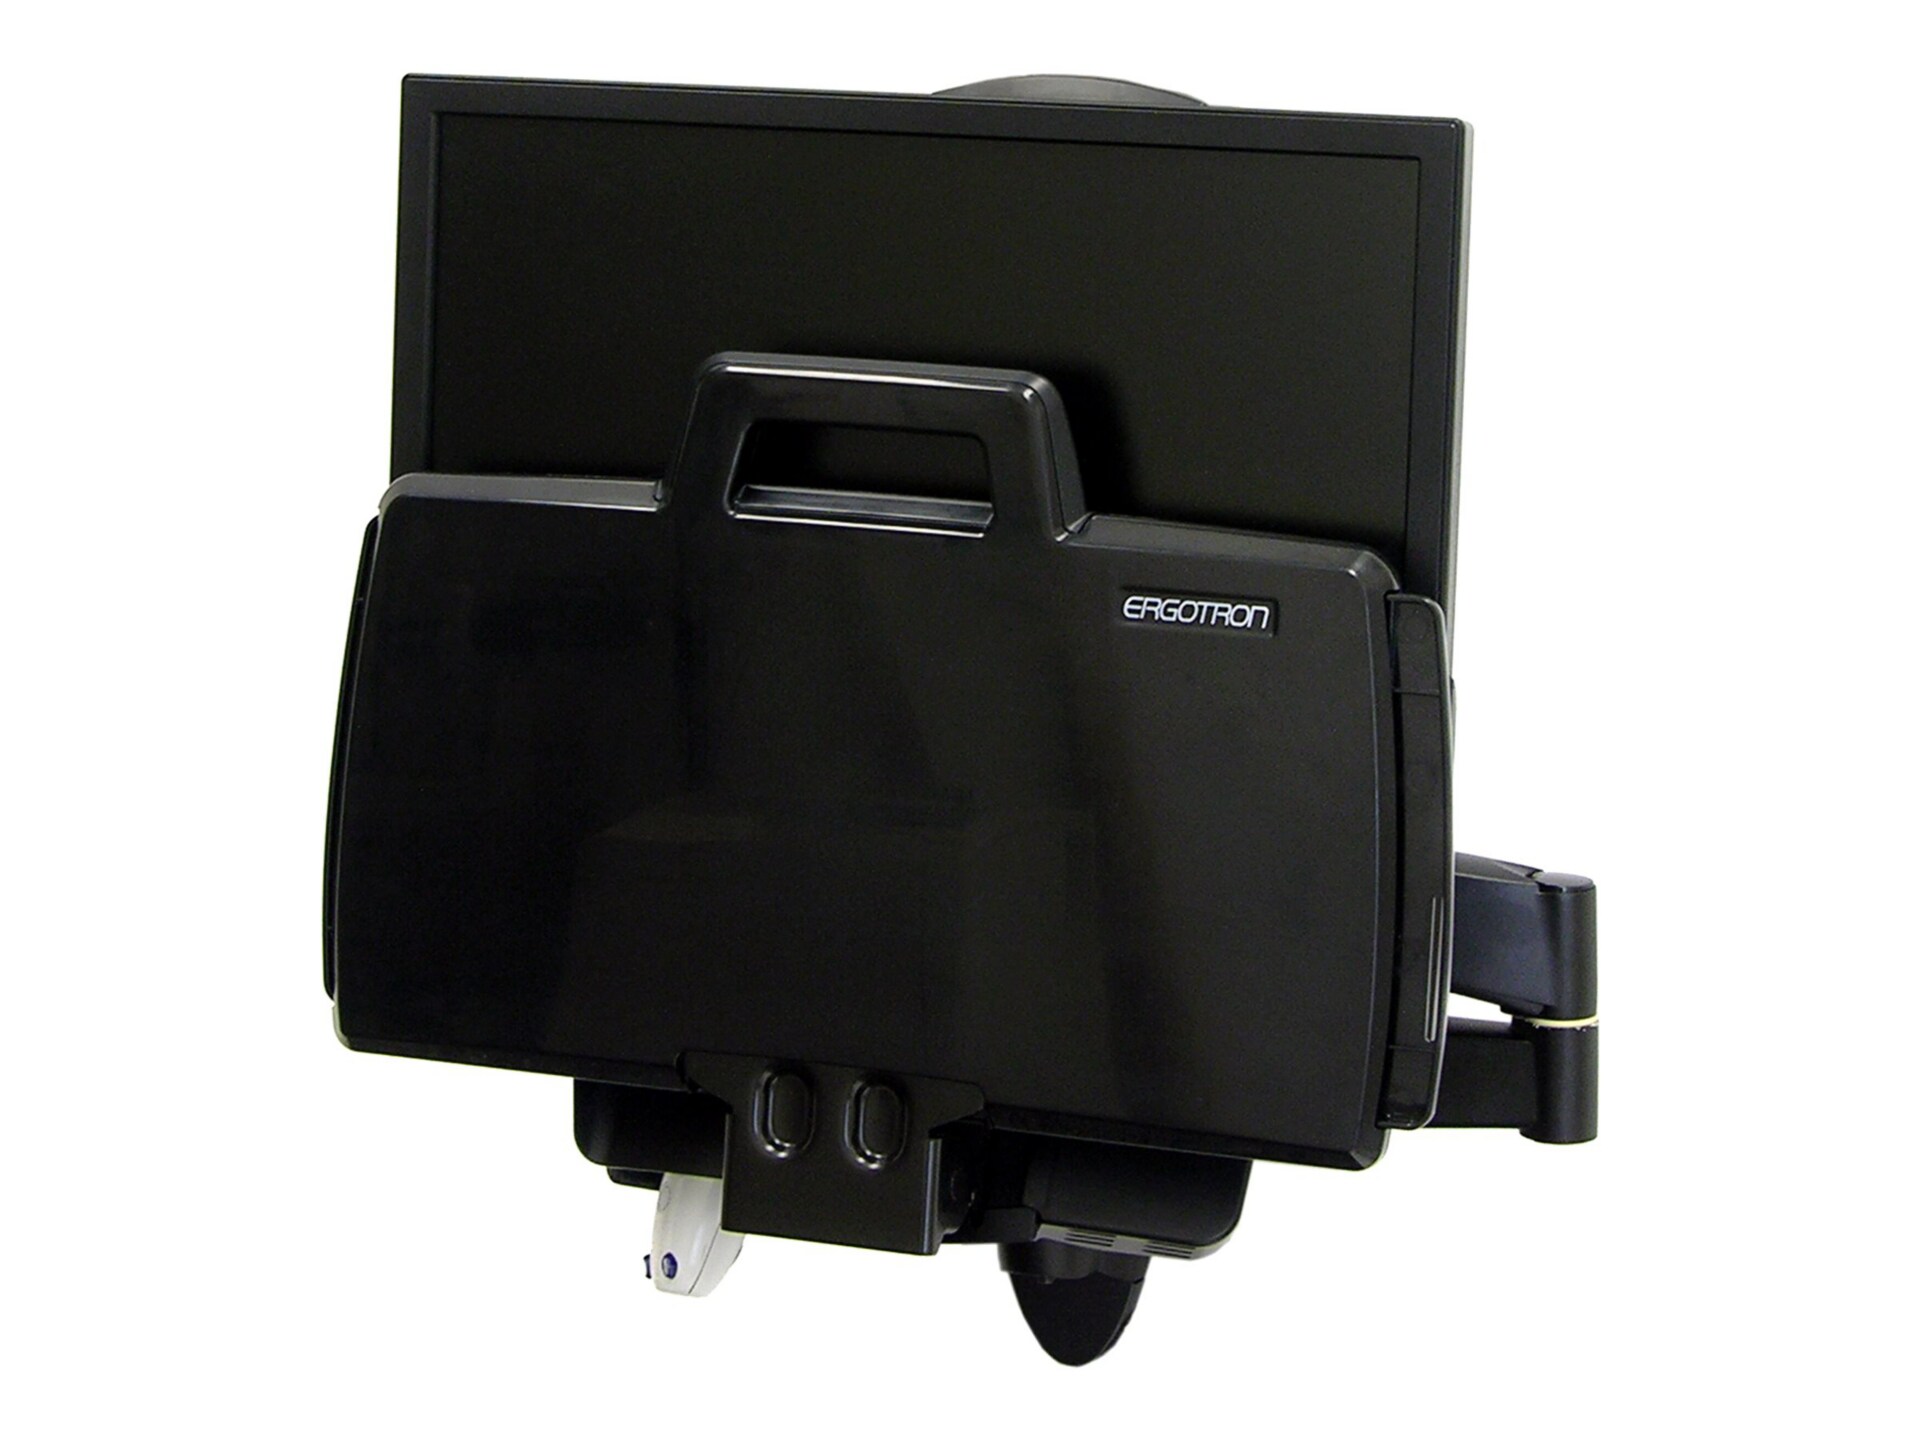 Ergotron 200 Series mounting kit - for LCD display / keyboard / mouse / bar